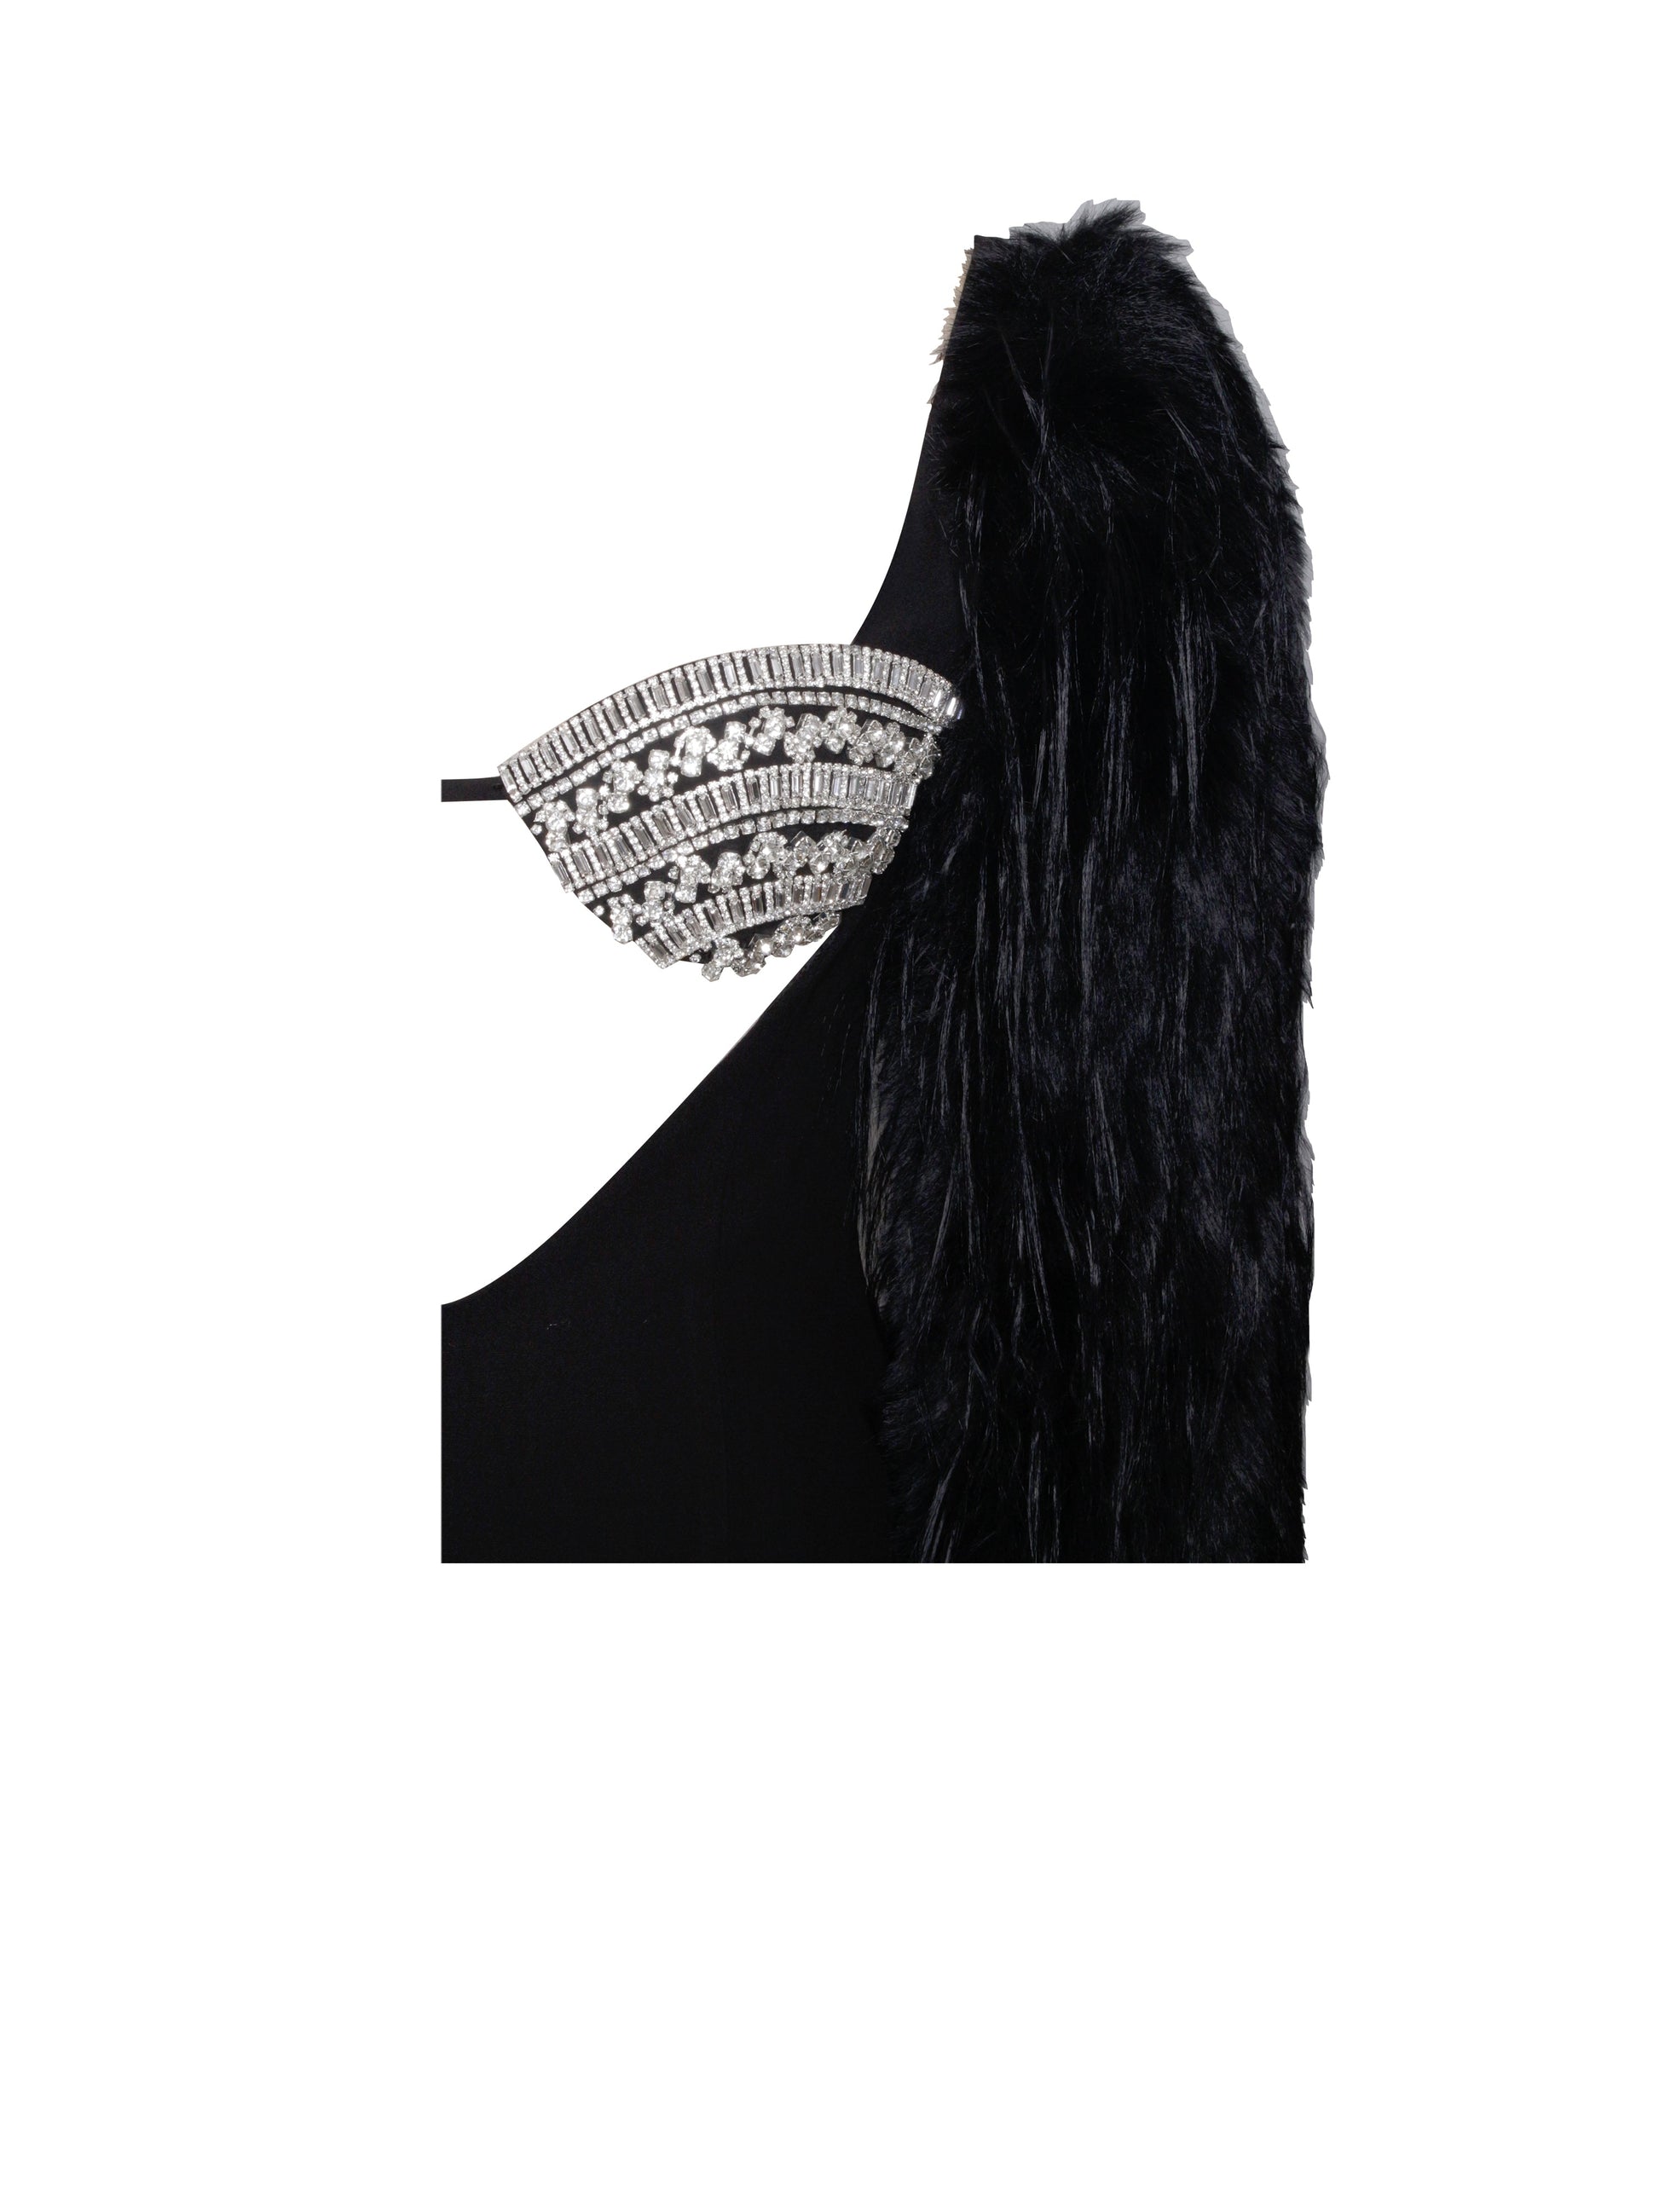 Idonea Black Faux Fur Sleeve Crystal Bustier Dress - HOUSE OF SHE